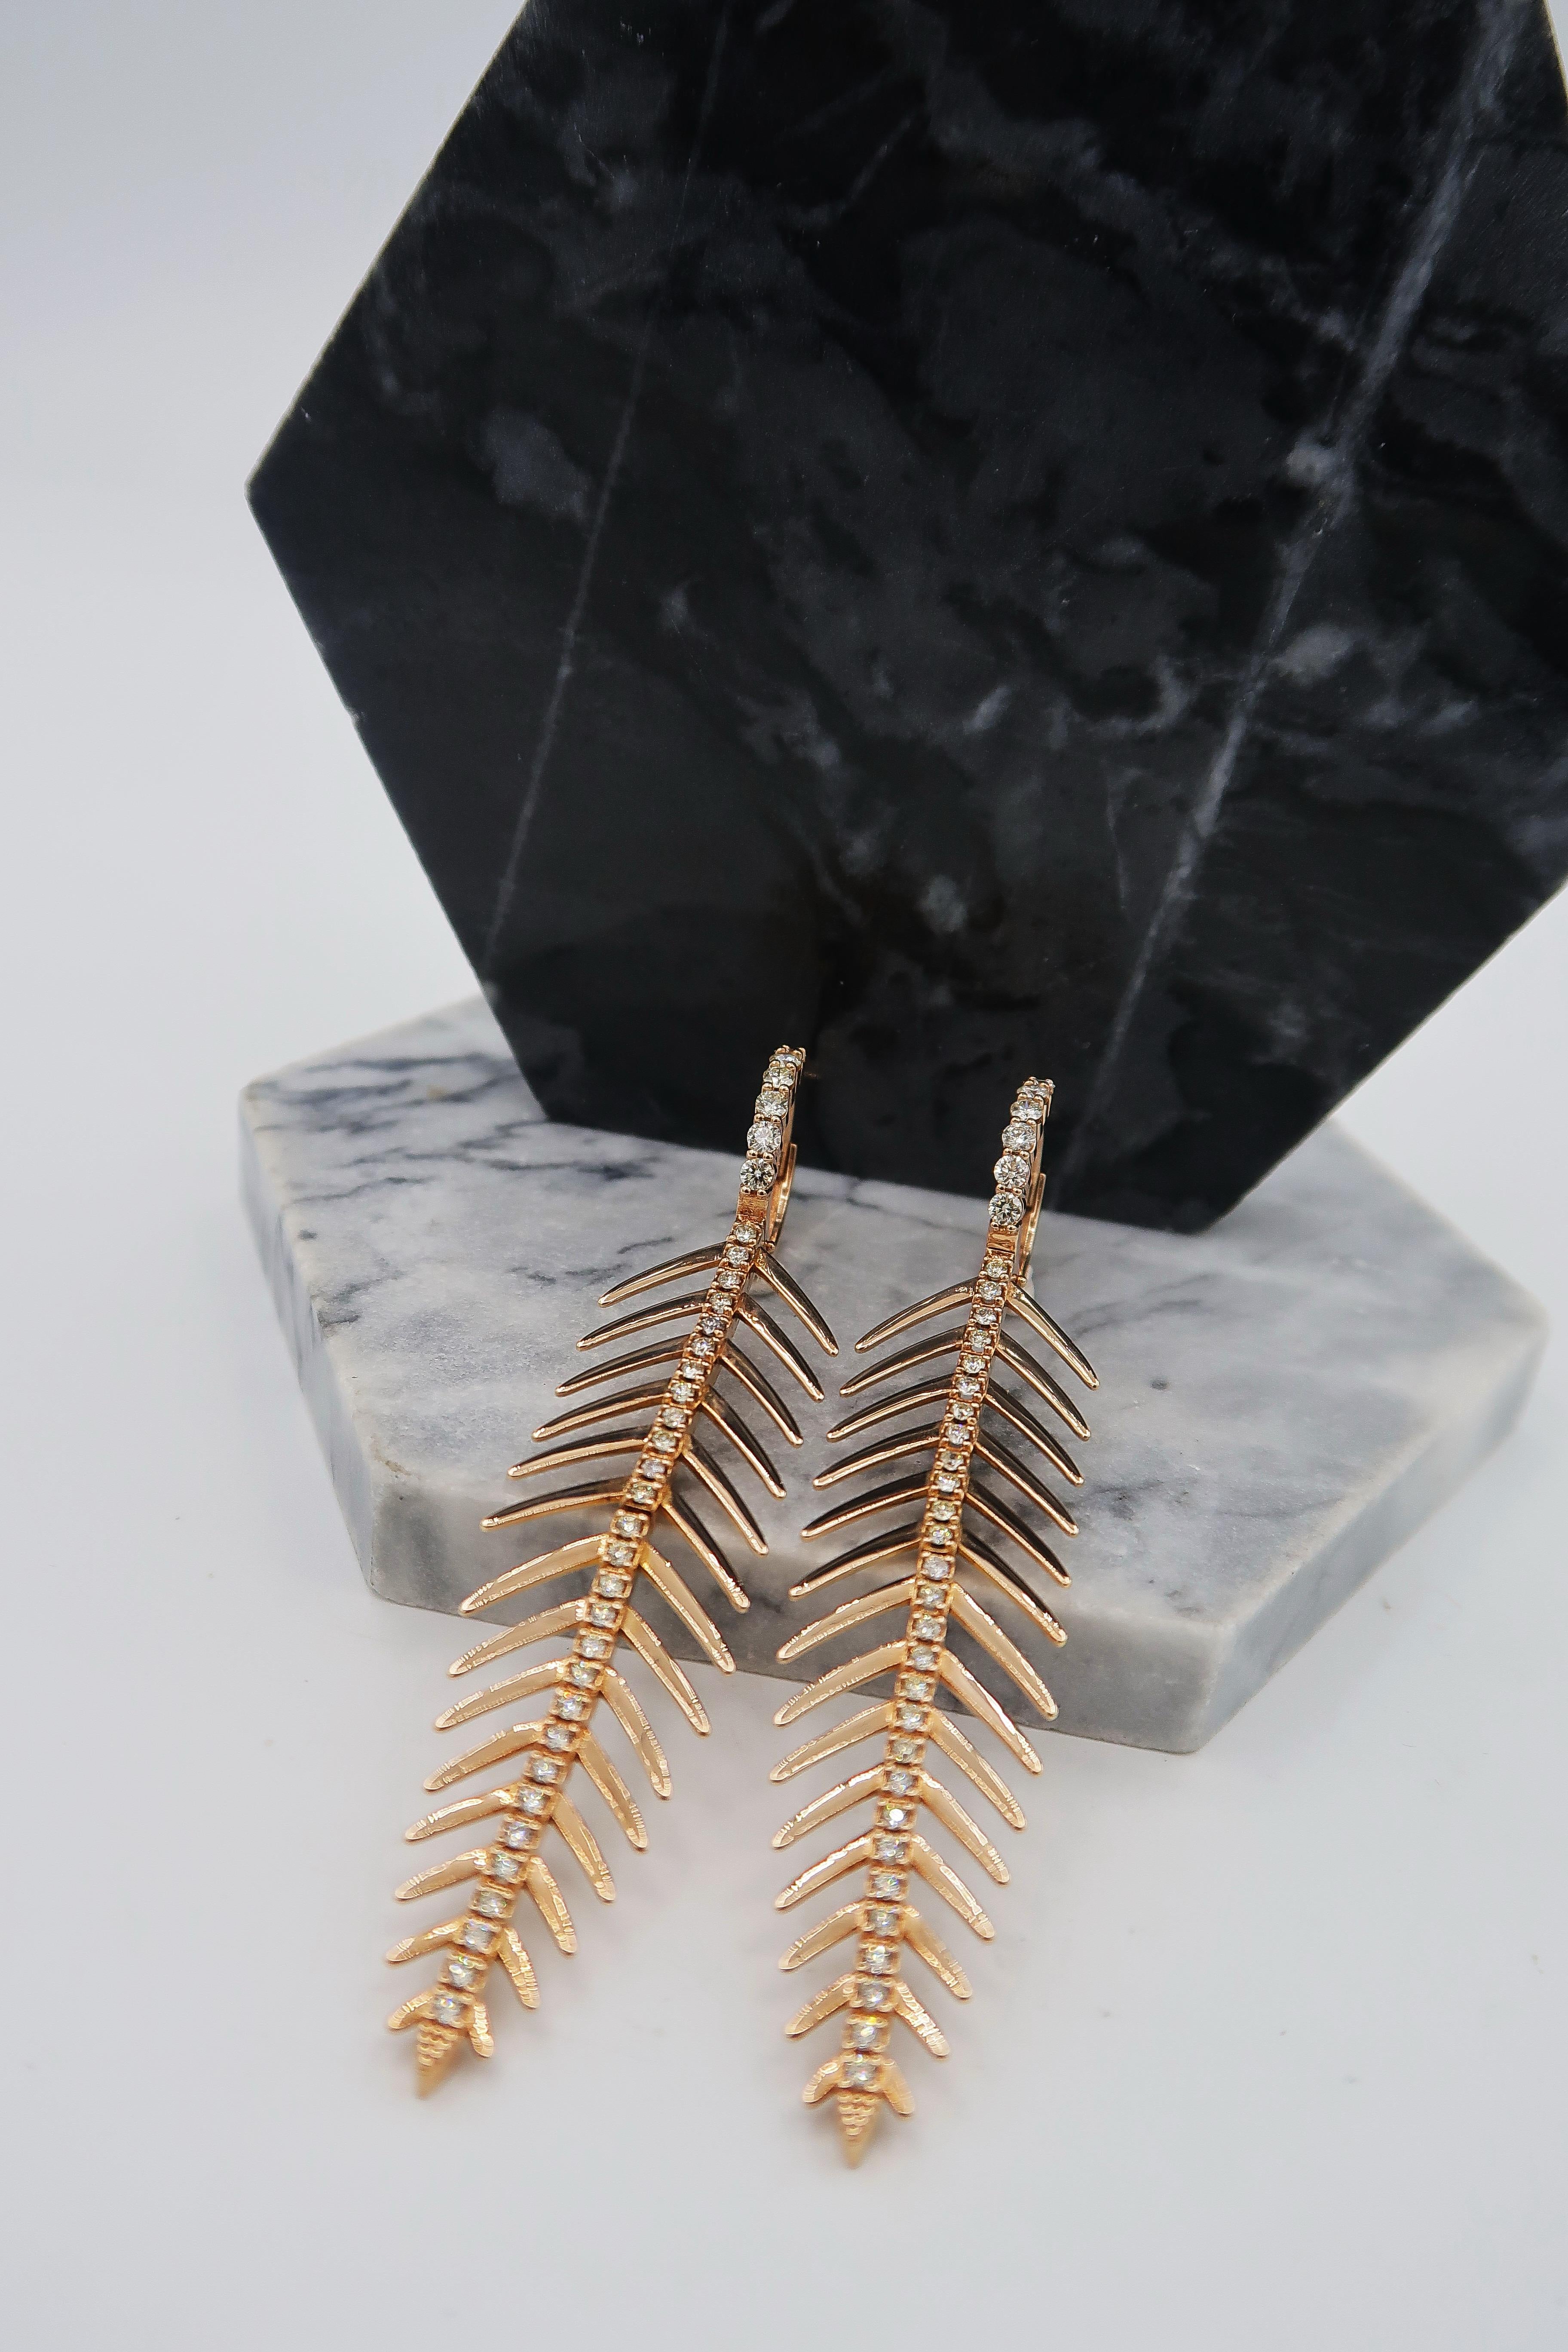 Long Flexible Herringbone Dangle Earrings in 18K Rose Gold embellished with Diamonds

Gold: 18K Rose Gold, 17.172 g
Diamond: 1.20 ct